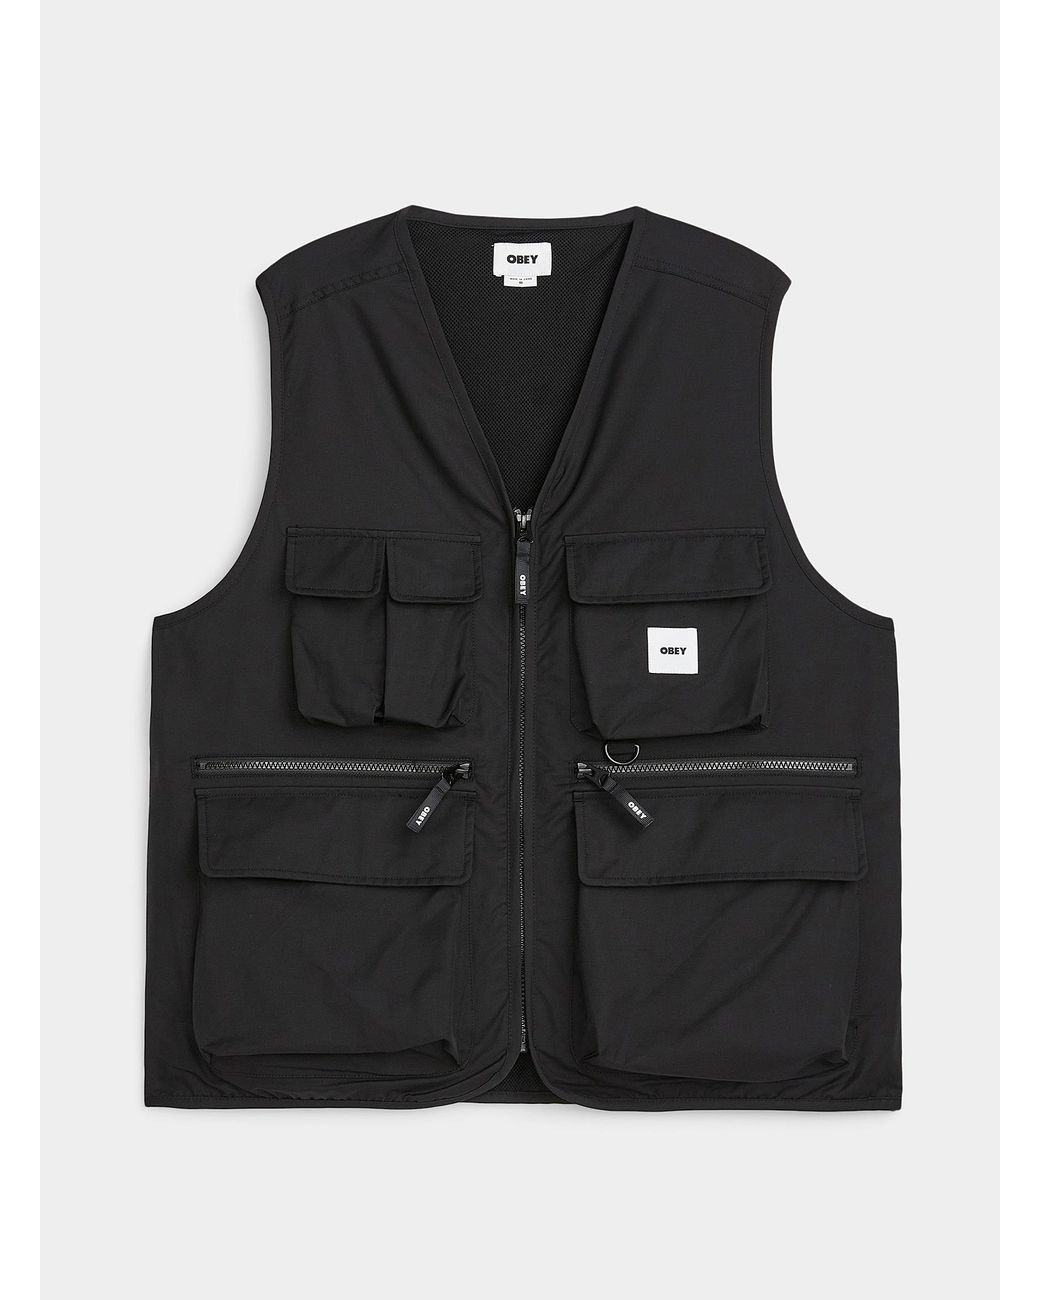 Obey Warefield Tactical Vest in Black for Men | Lyst